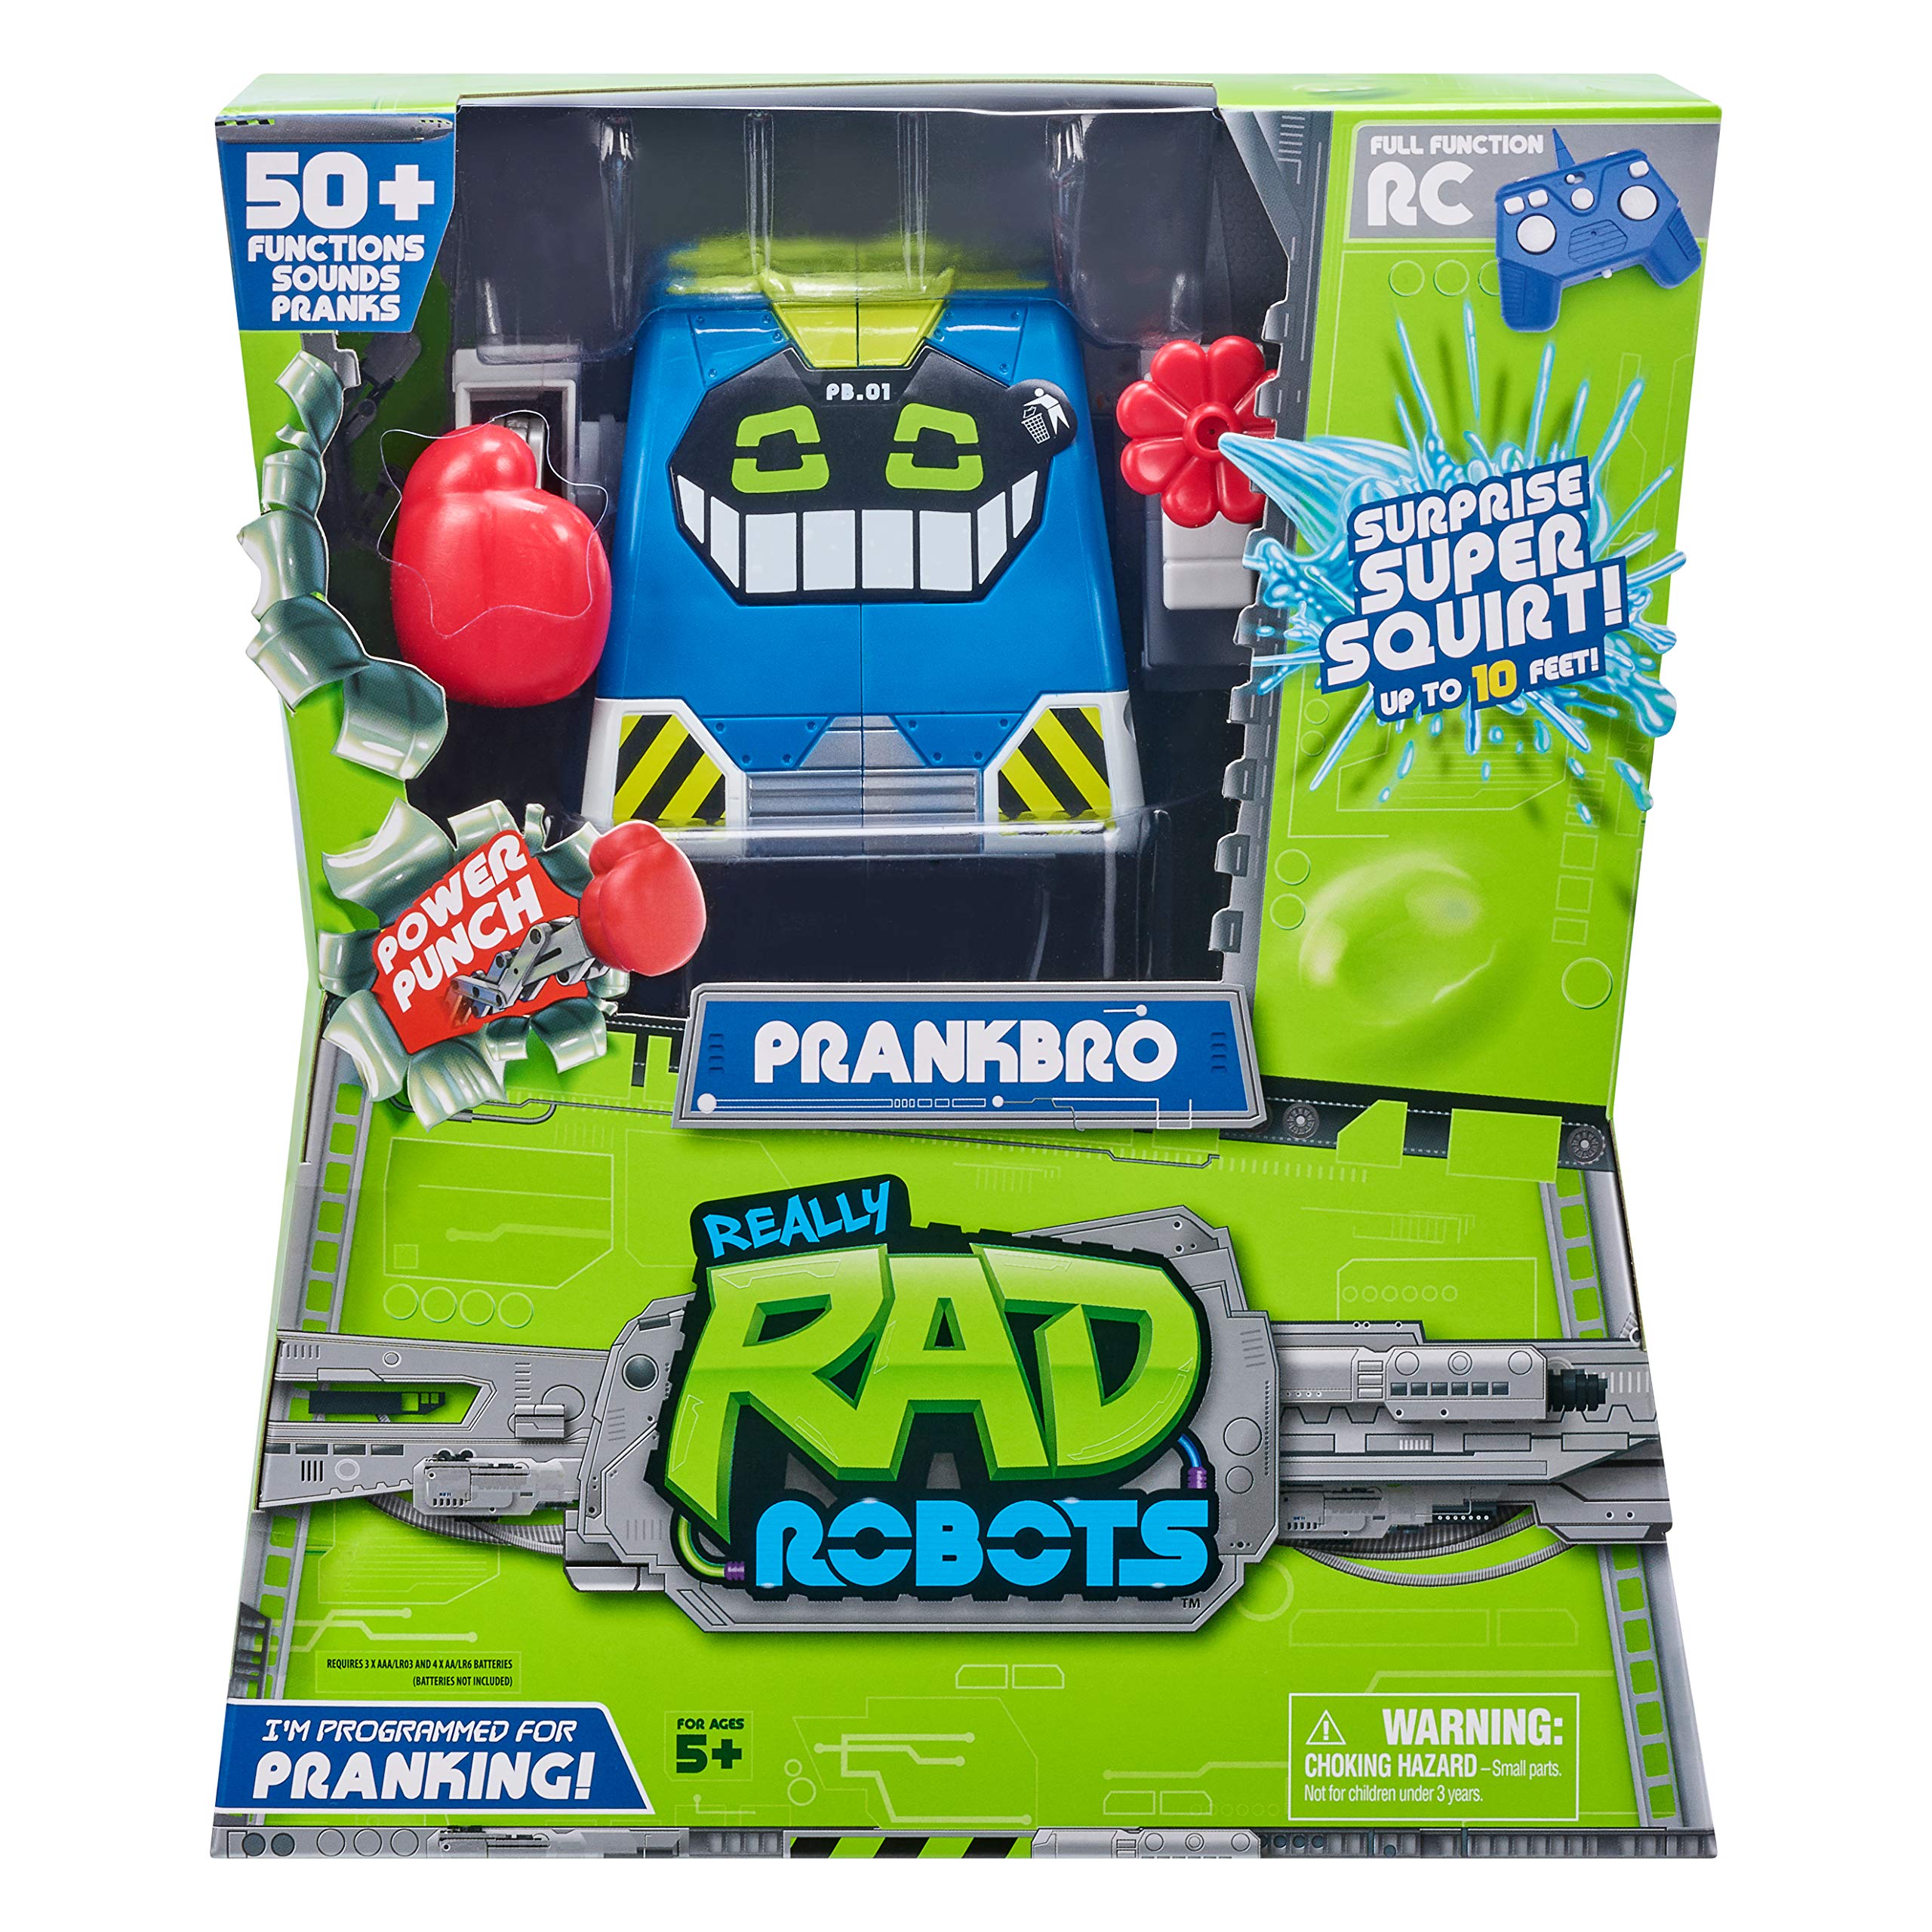 Really Rad Robots - Prankbro